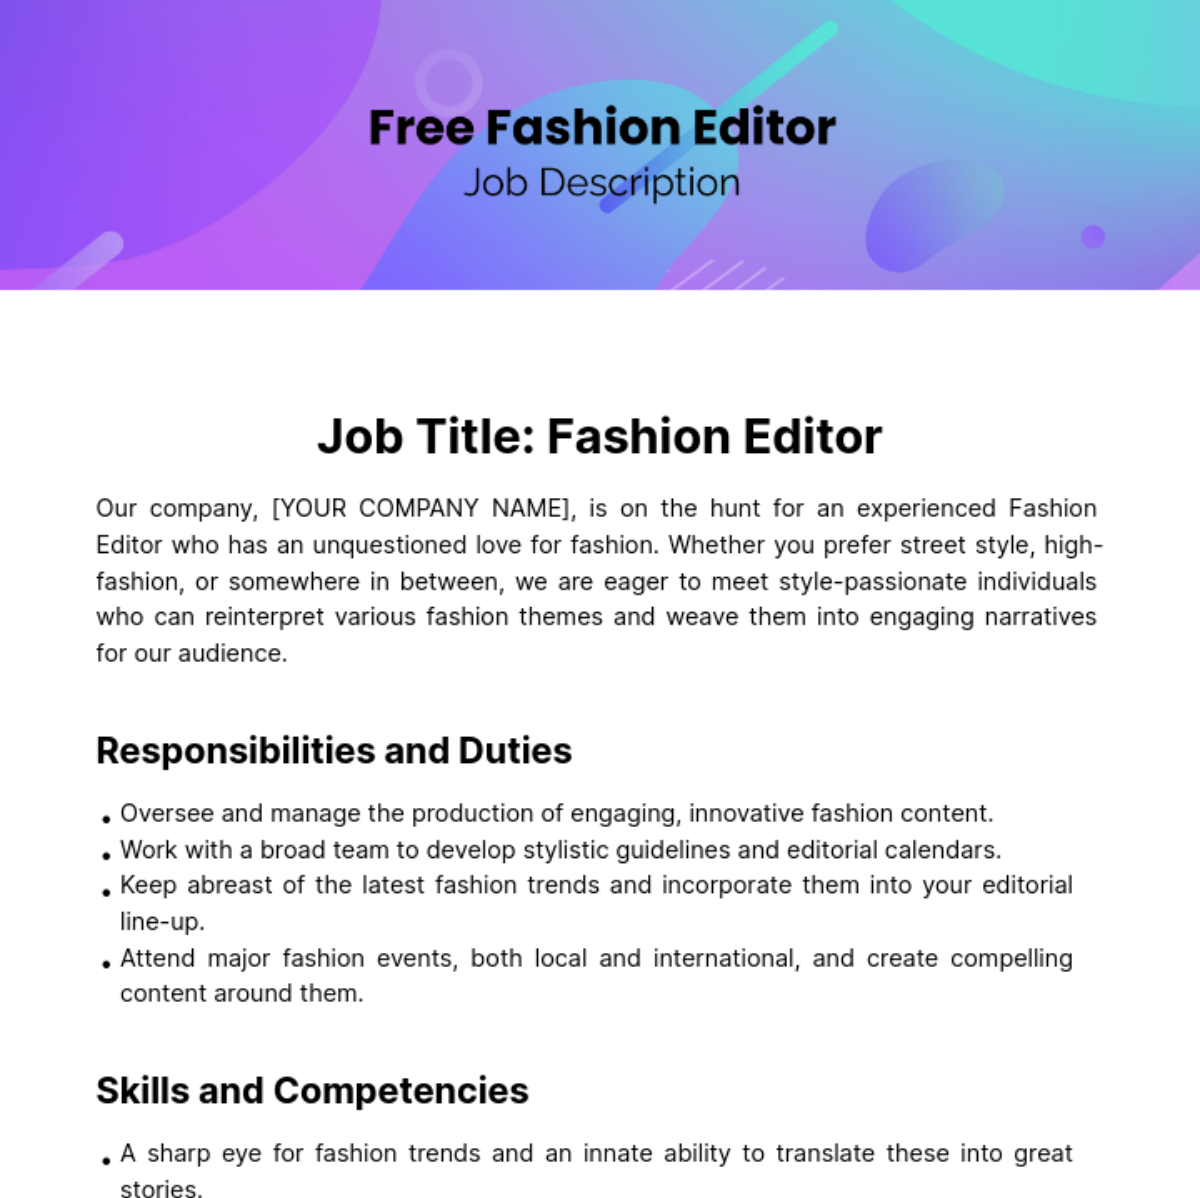 Free Fashion Editor Job Description Template